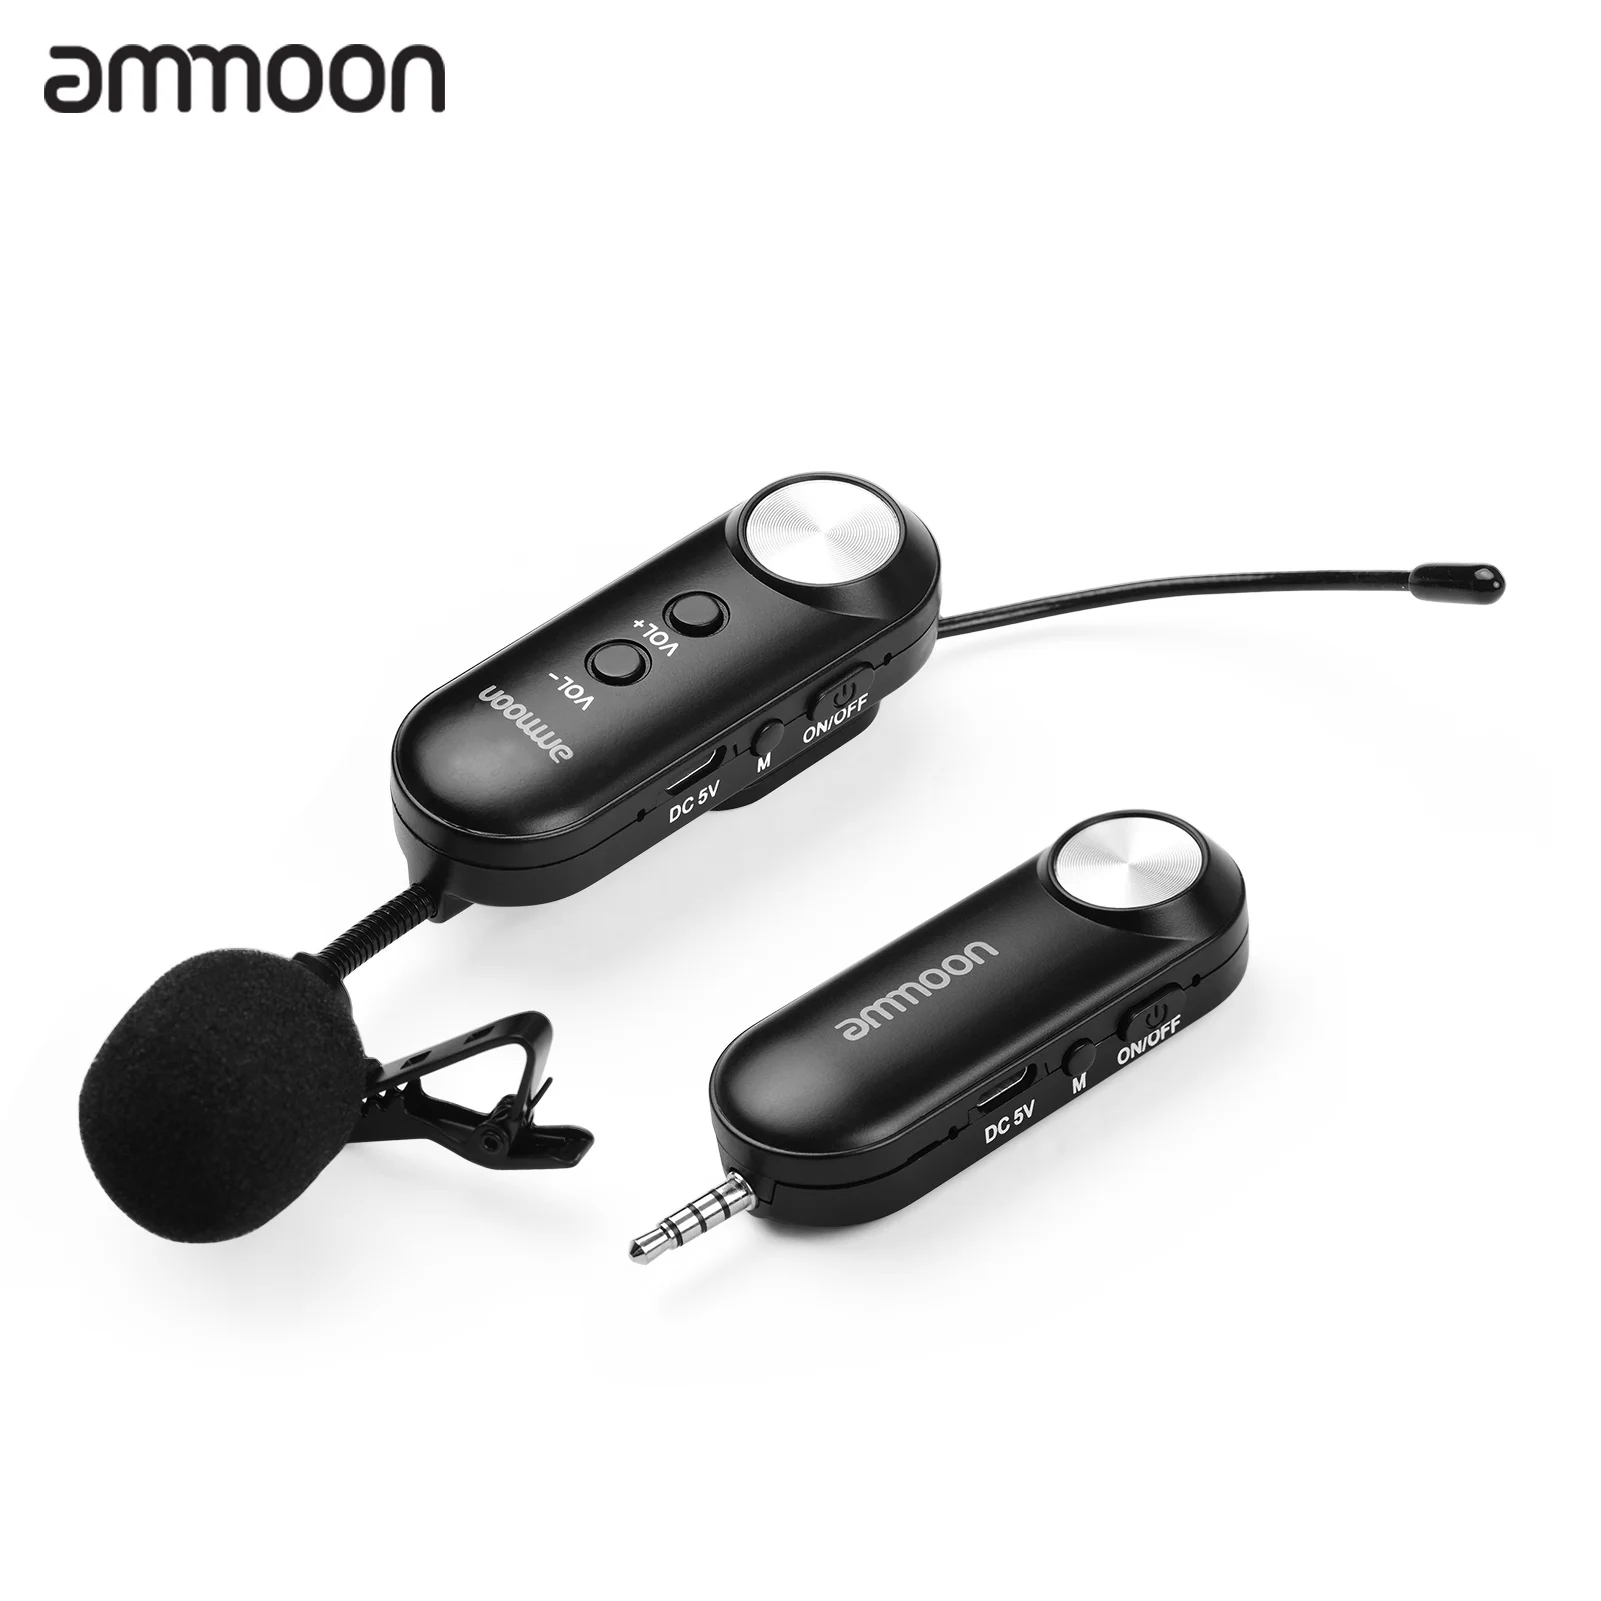 

ammoon U260 Mobile Phone Version UHF Multi-Purpose Wireless Microphone Lavalier Lapel Condenser Microphone Transmitter Receiver